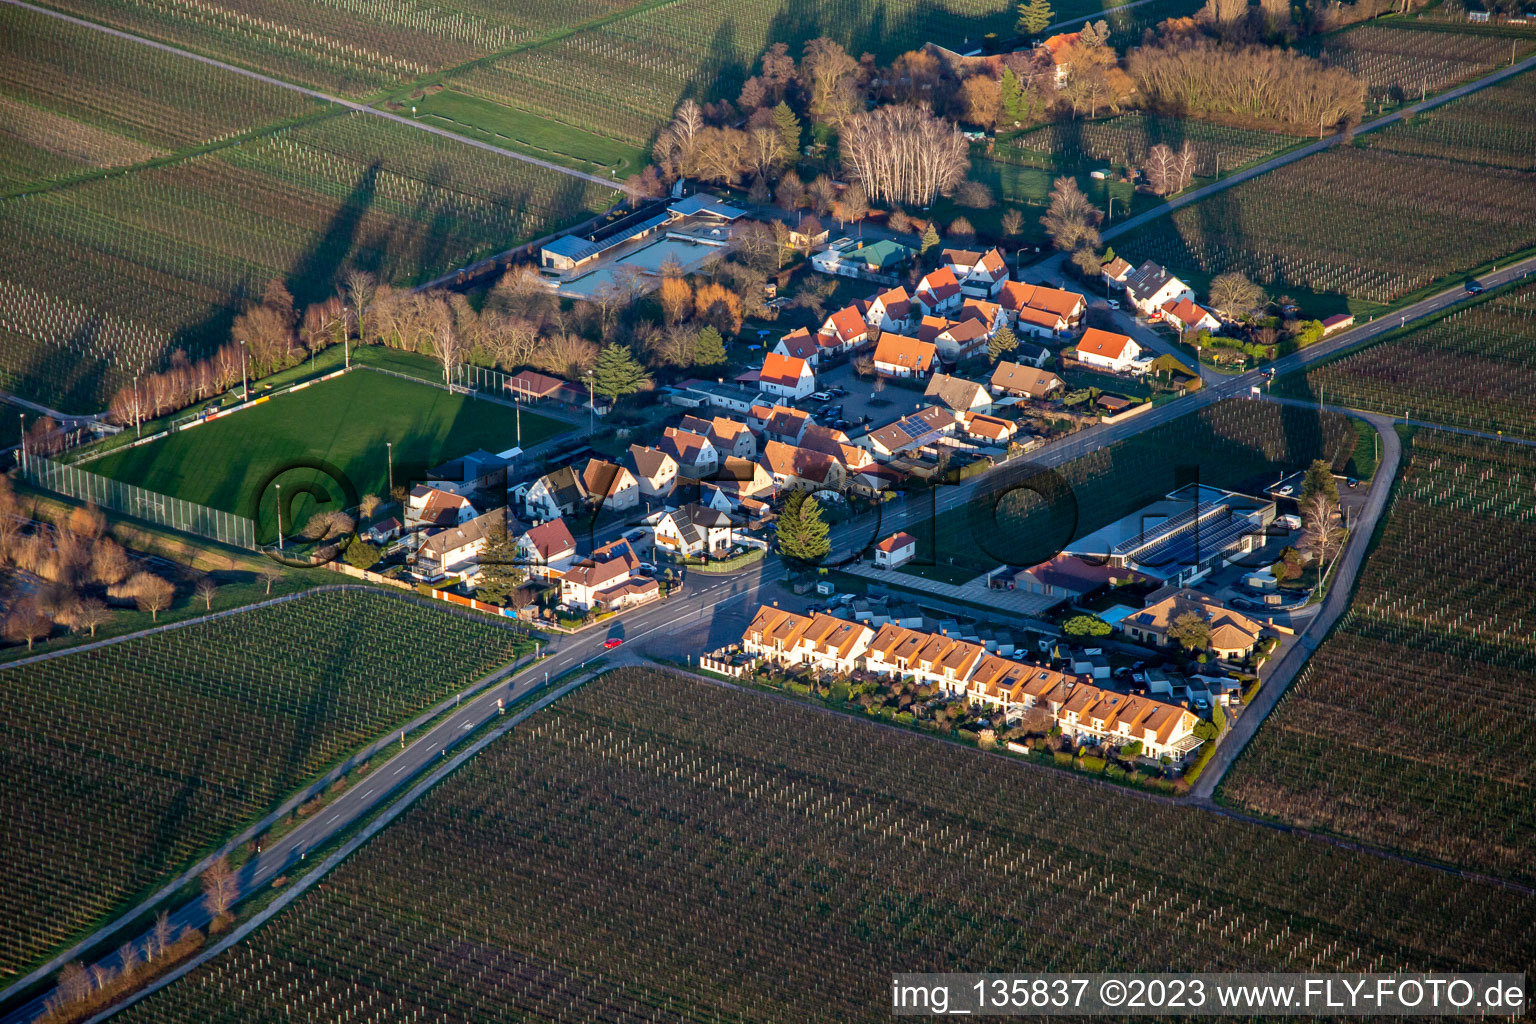 Leonhard Eckel settlement in Edesheim in the state Rhineland-Palatinate, Germany